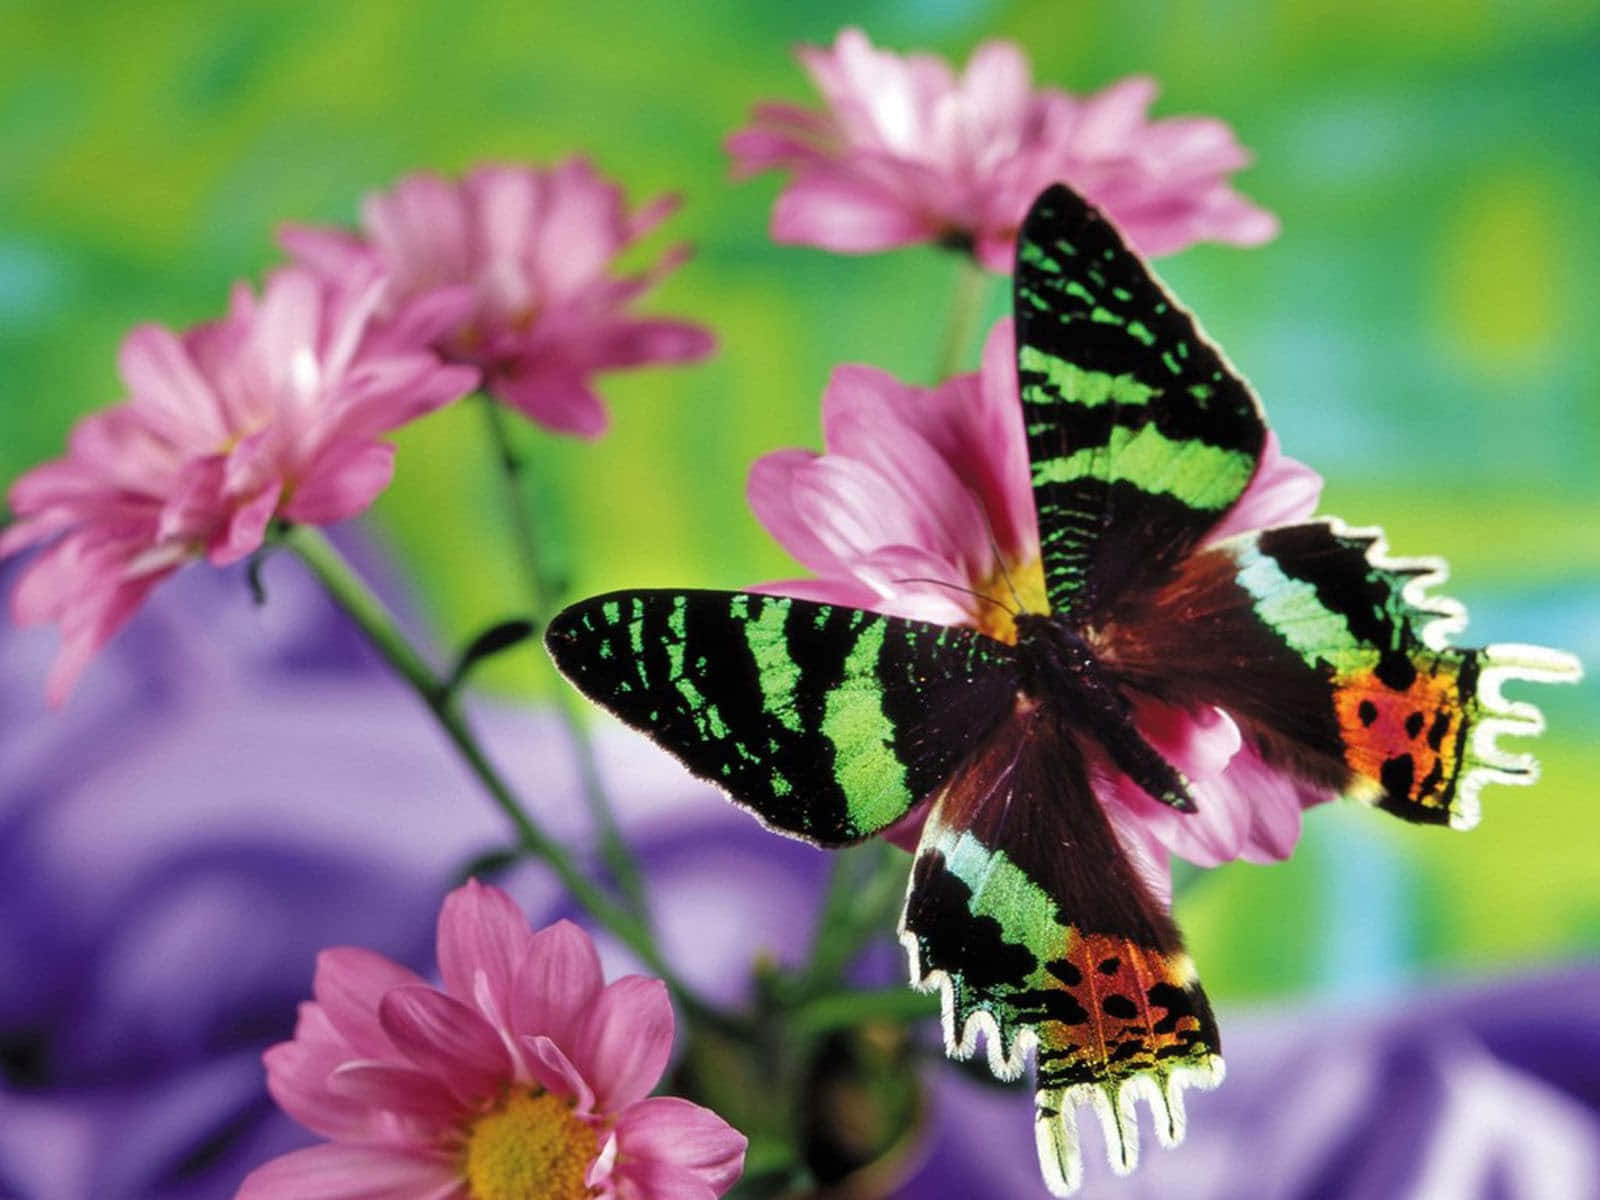 "The beauty of an Emerging Butterfly" Wallpaper